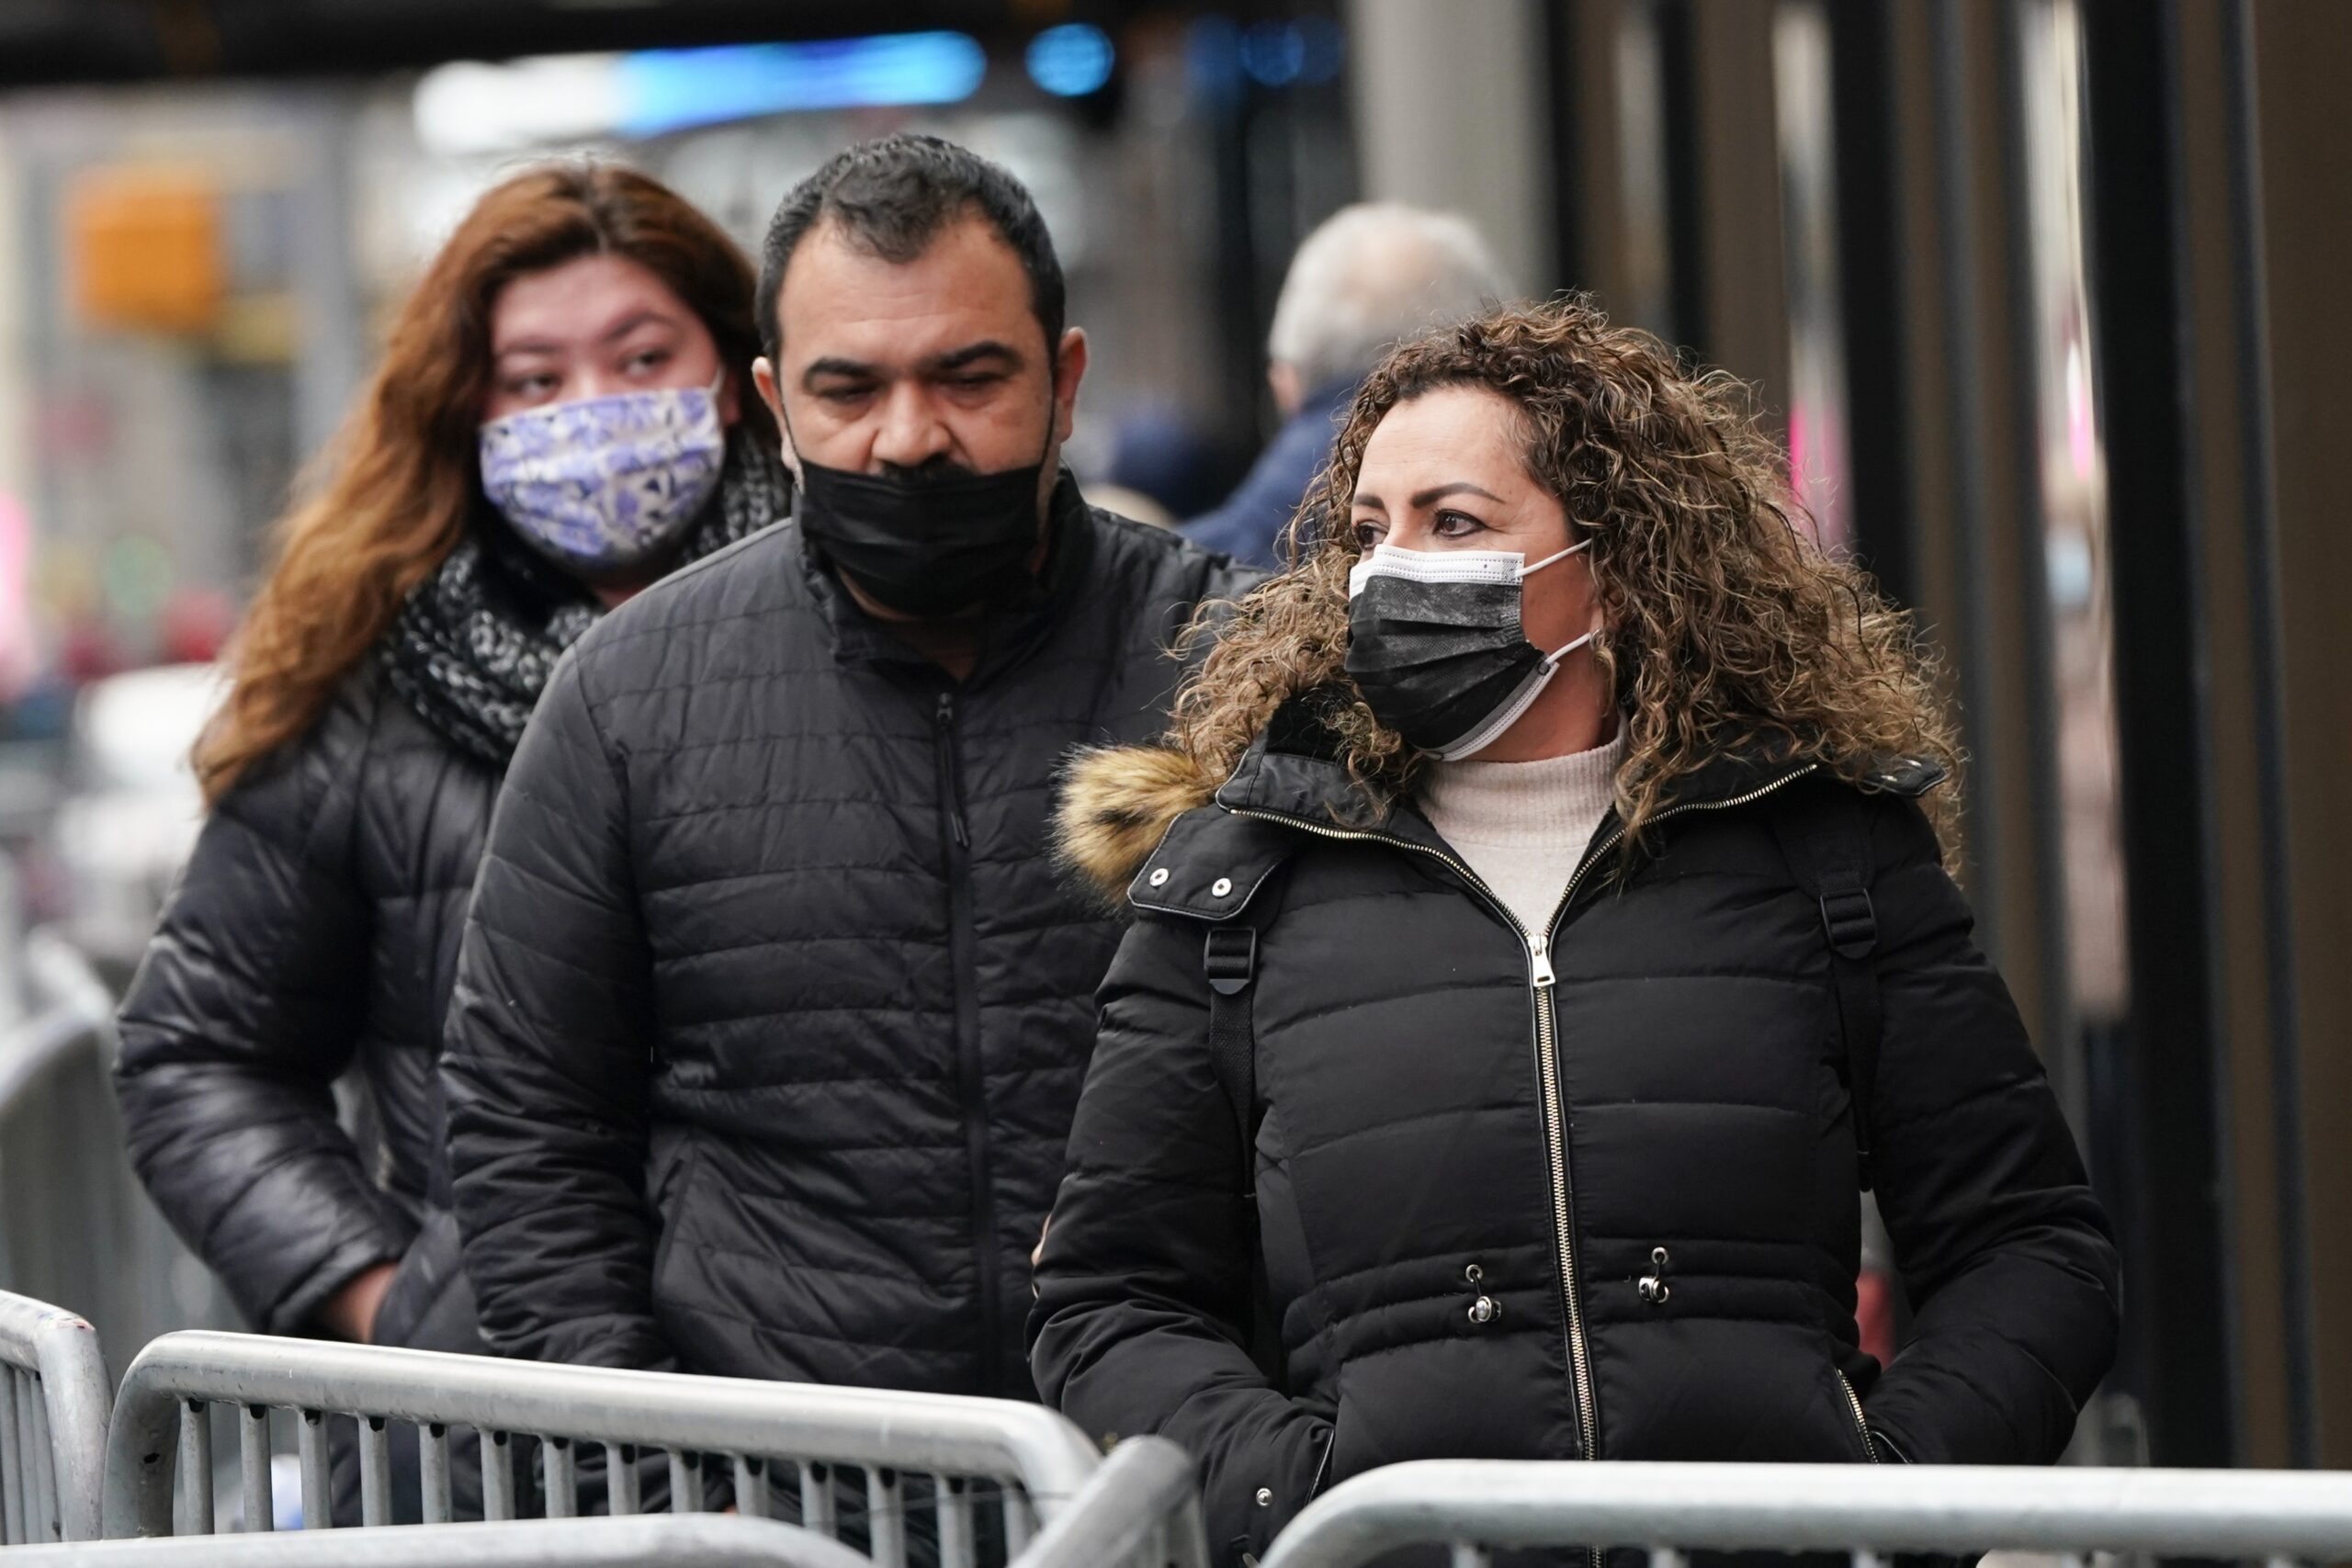 Pedestrians wear protective masks